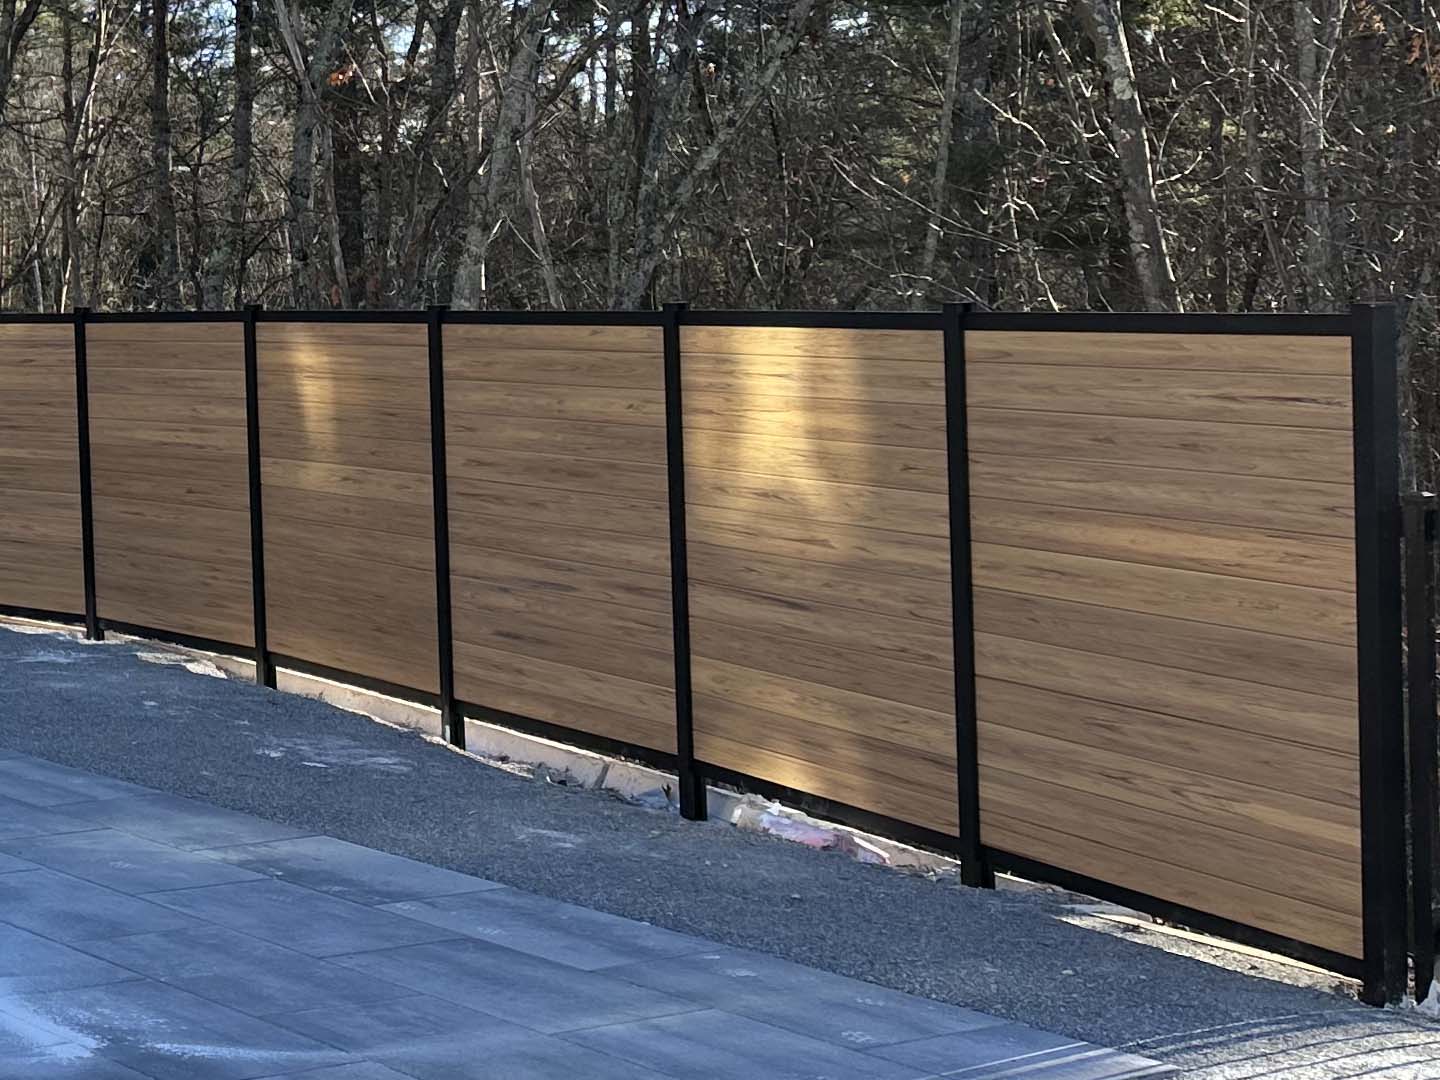 Topsfield MA horizontal style wood fence